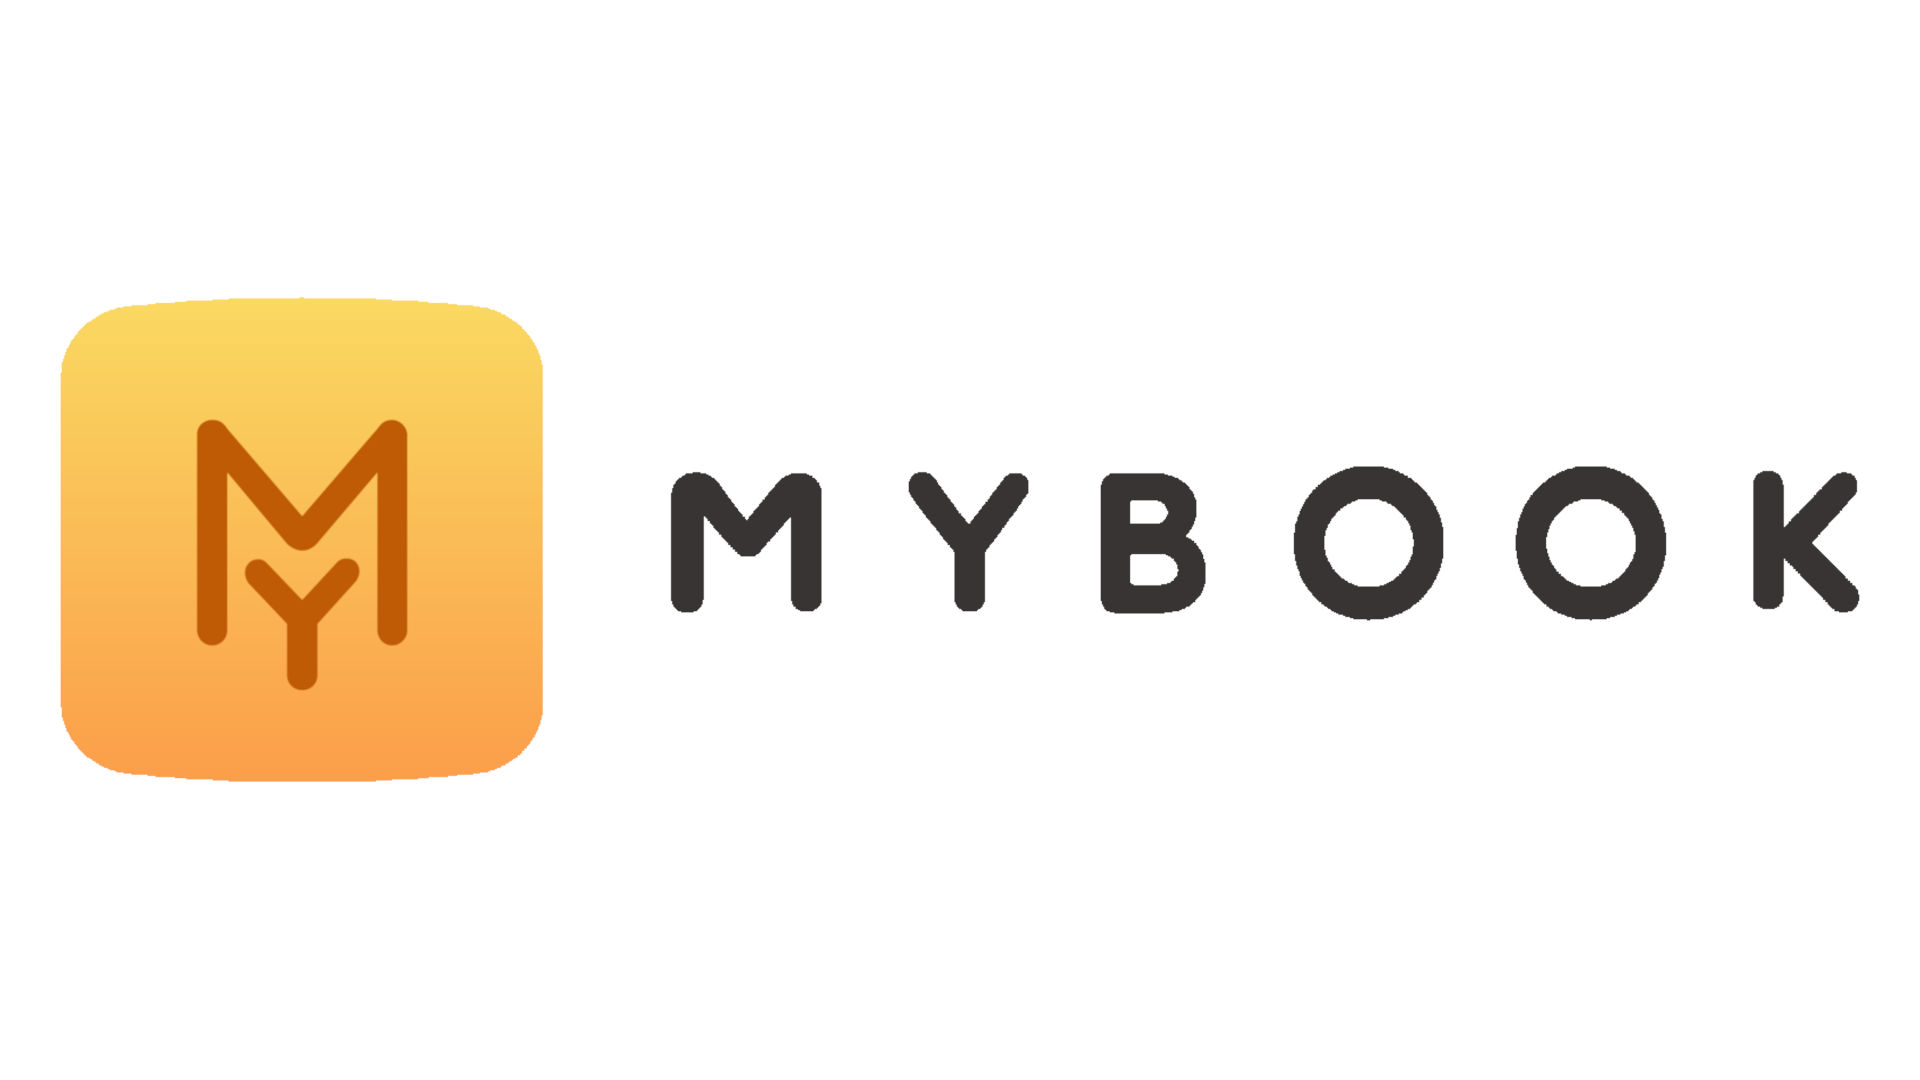 My book people. MYBOOK лого. MYBOOK Premium. Майбук премиум. My book.